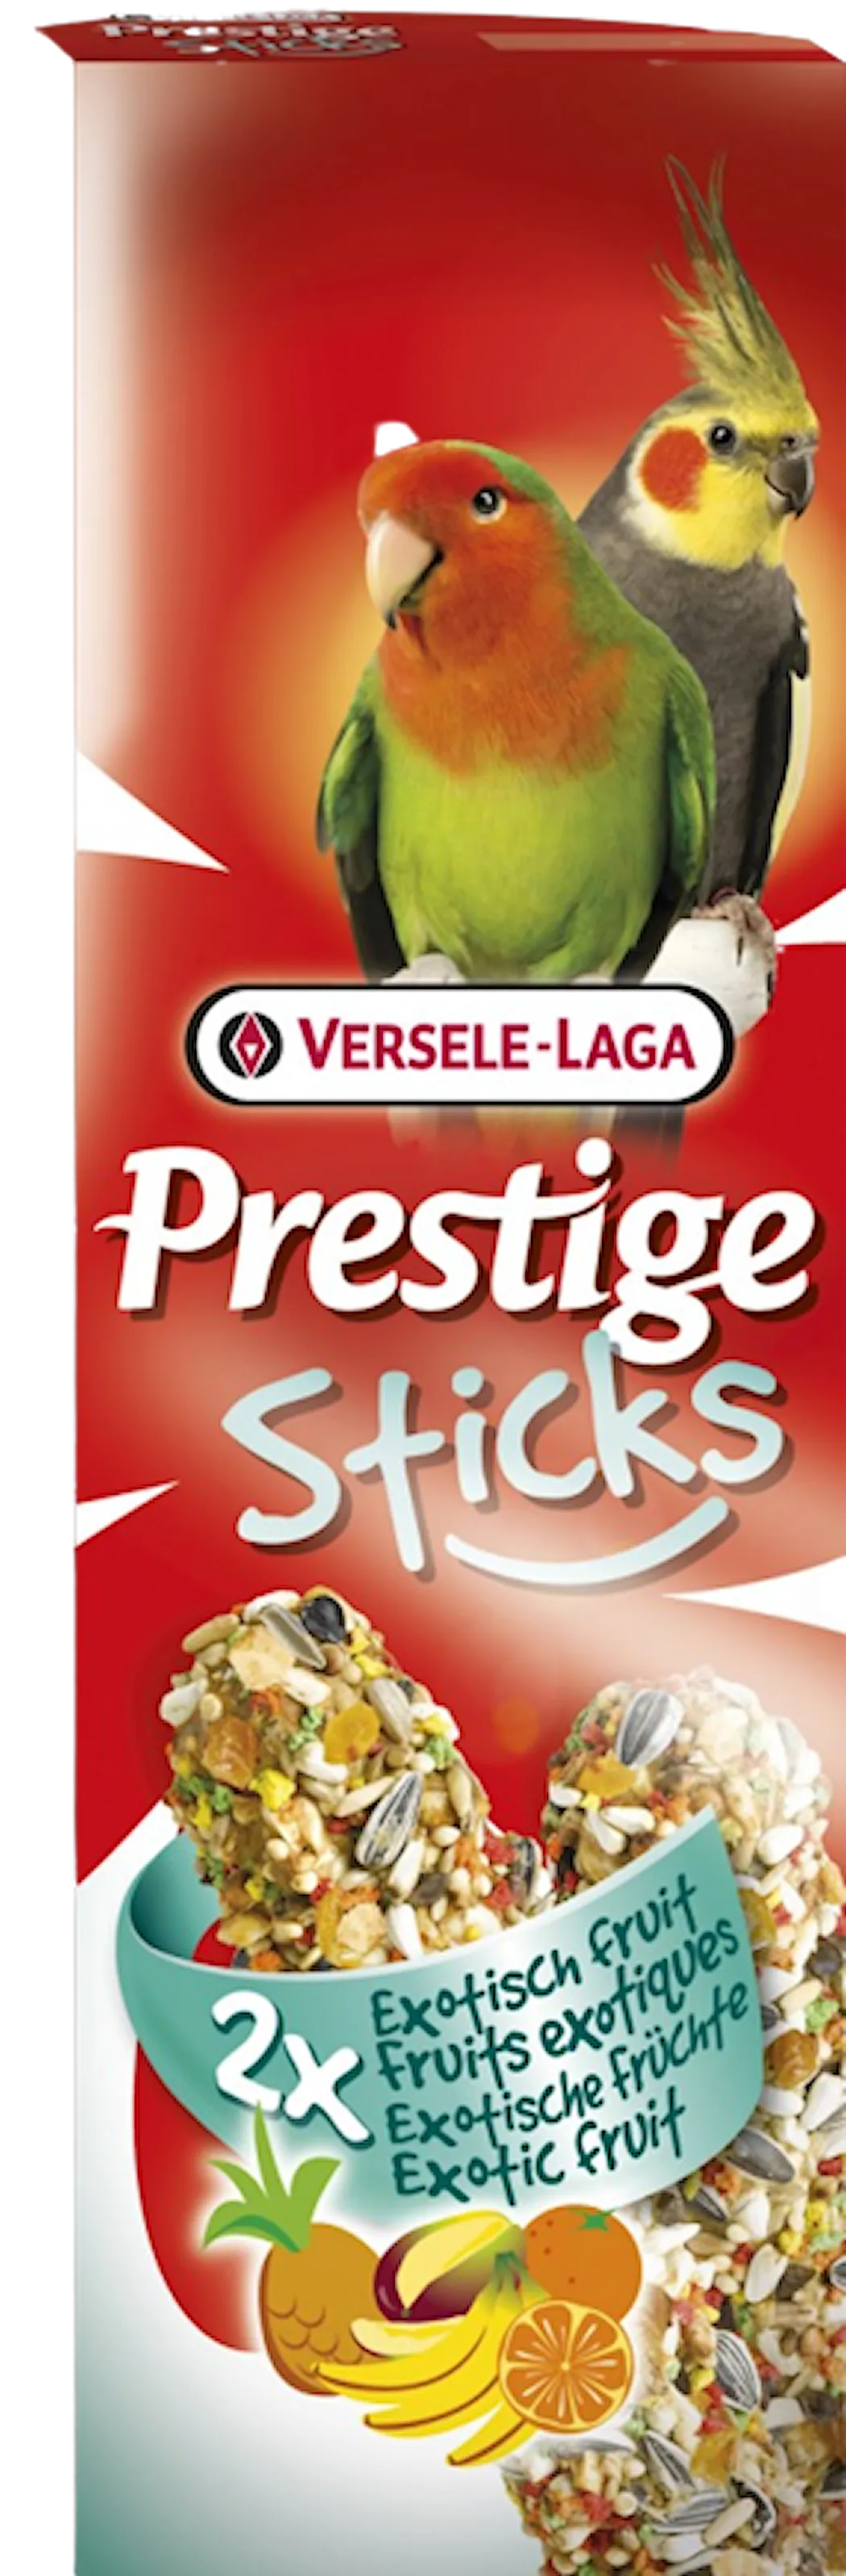 Versele-Laga Prestige Sticks Big Exotic Fruit